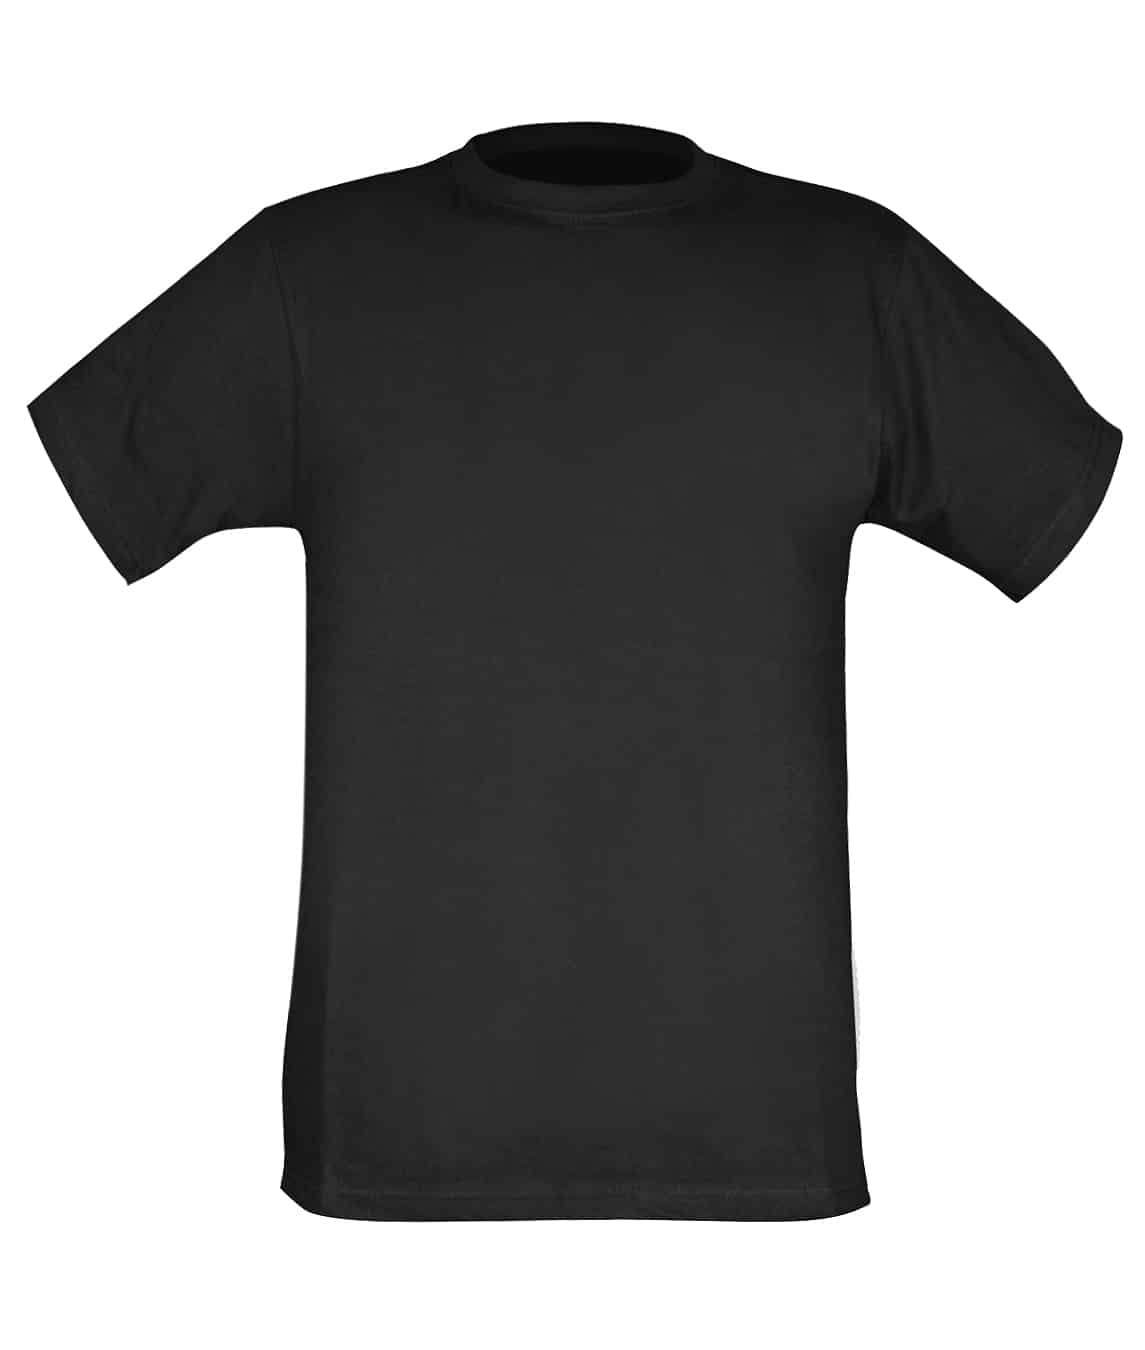 Fastrack T-shirt